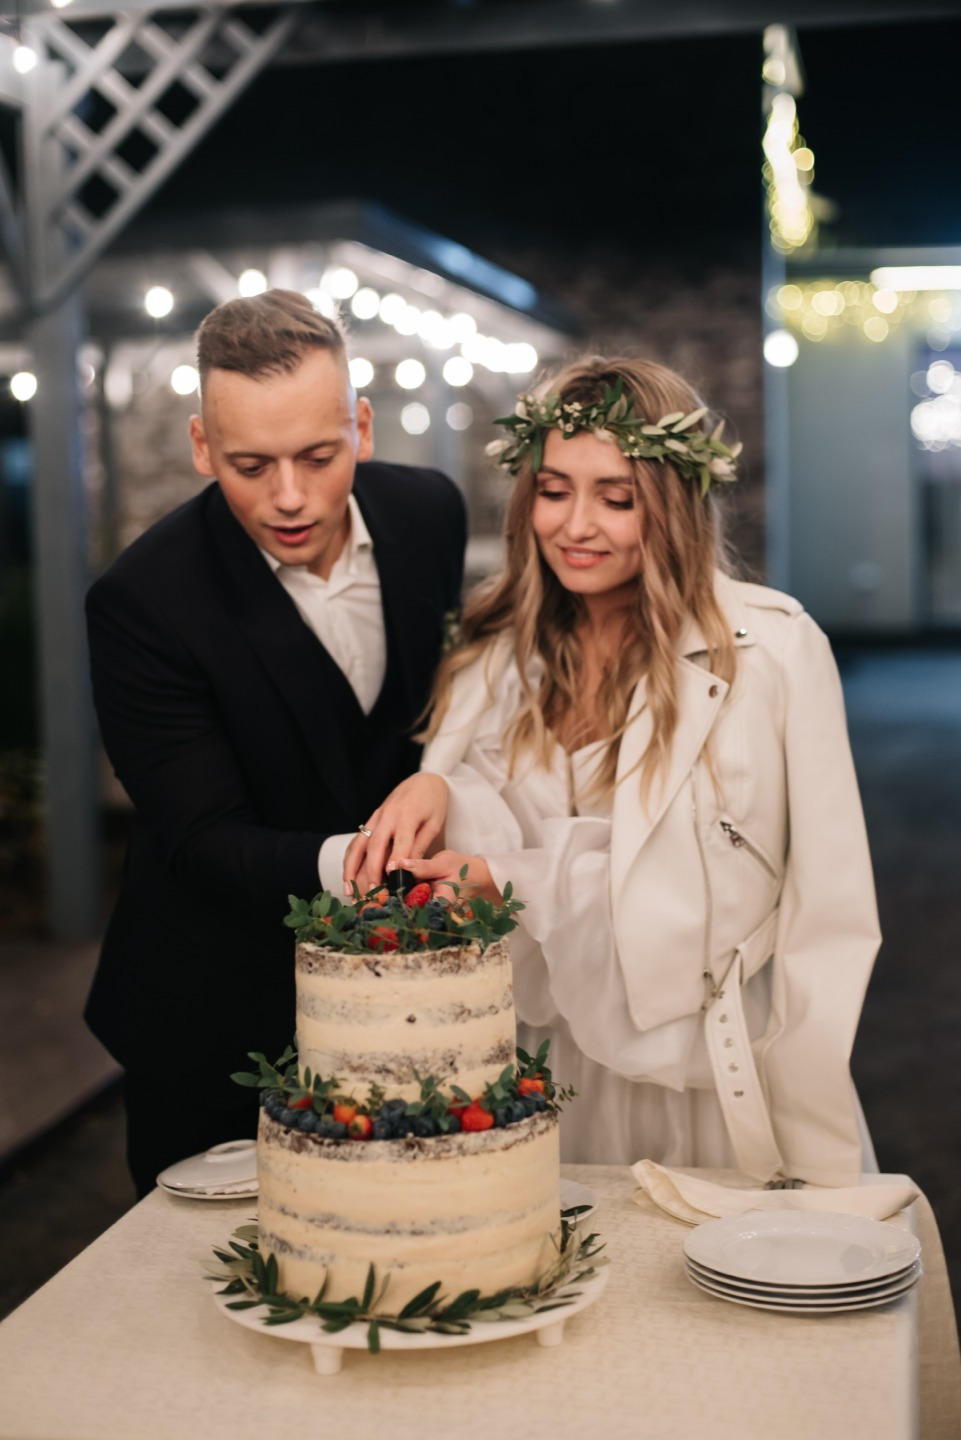 Рустик-свадьба в «Доме у леса»